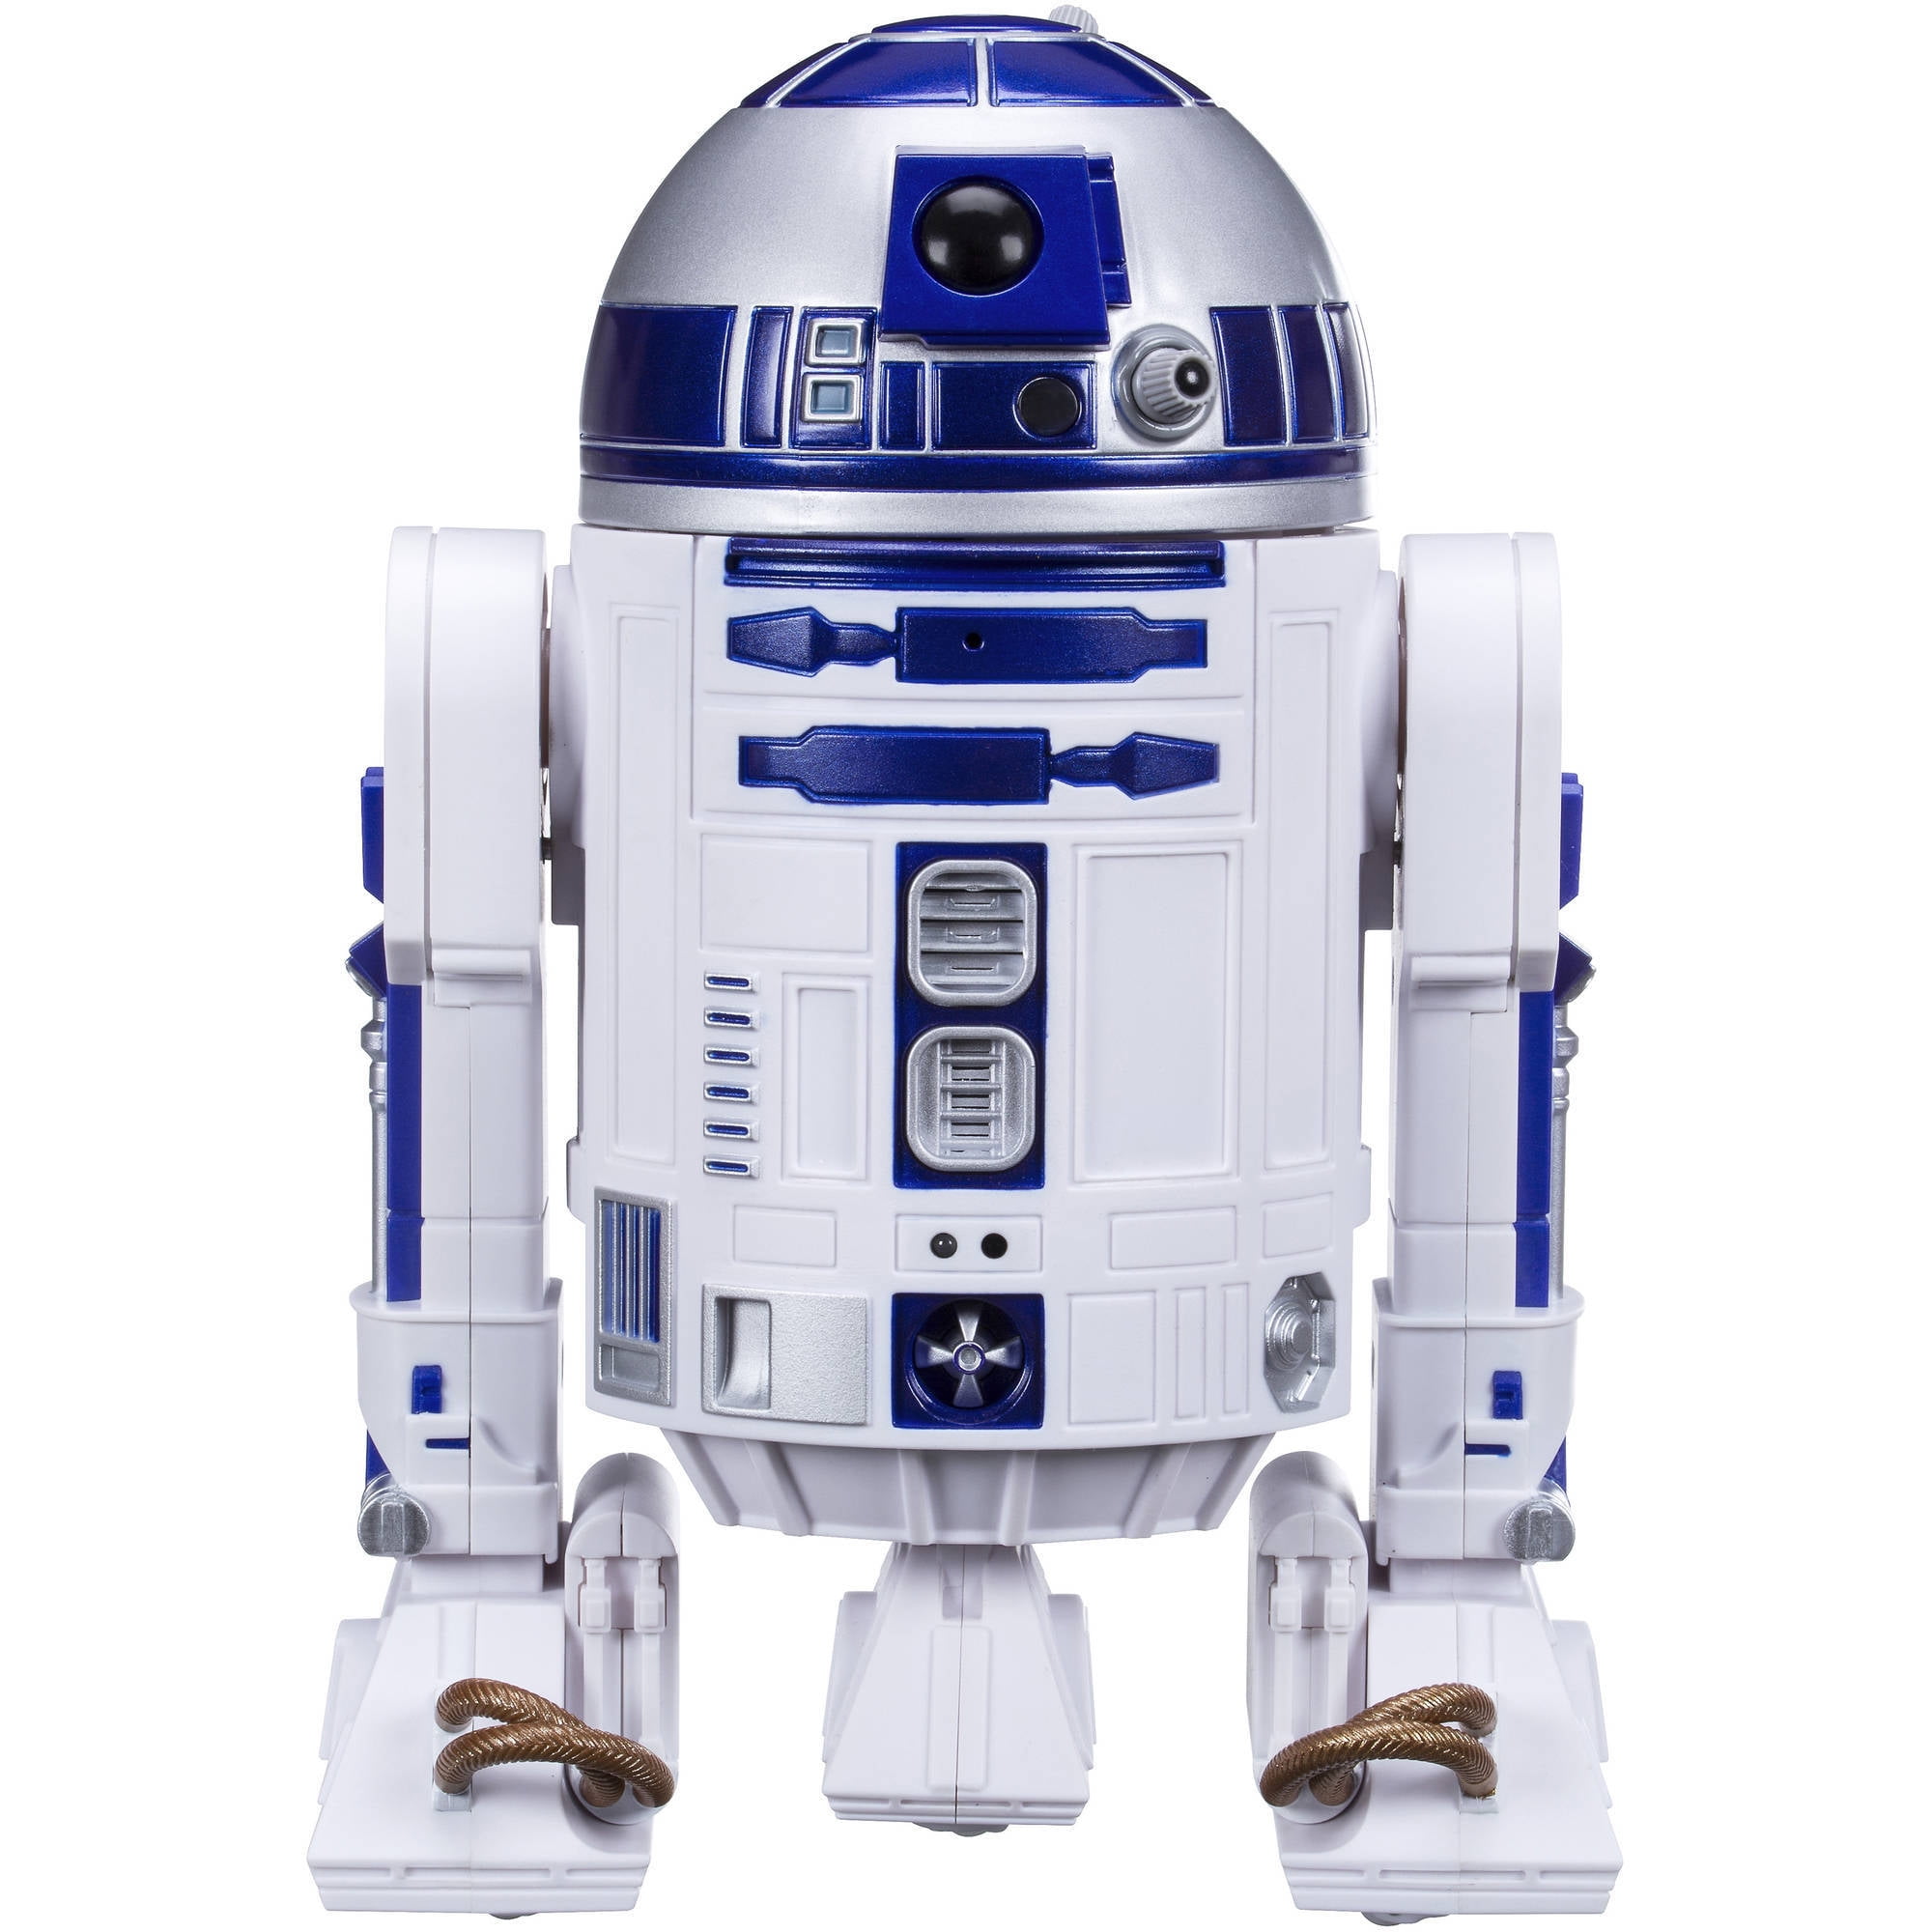 star wars droid inventor kit walmart